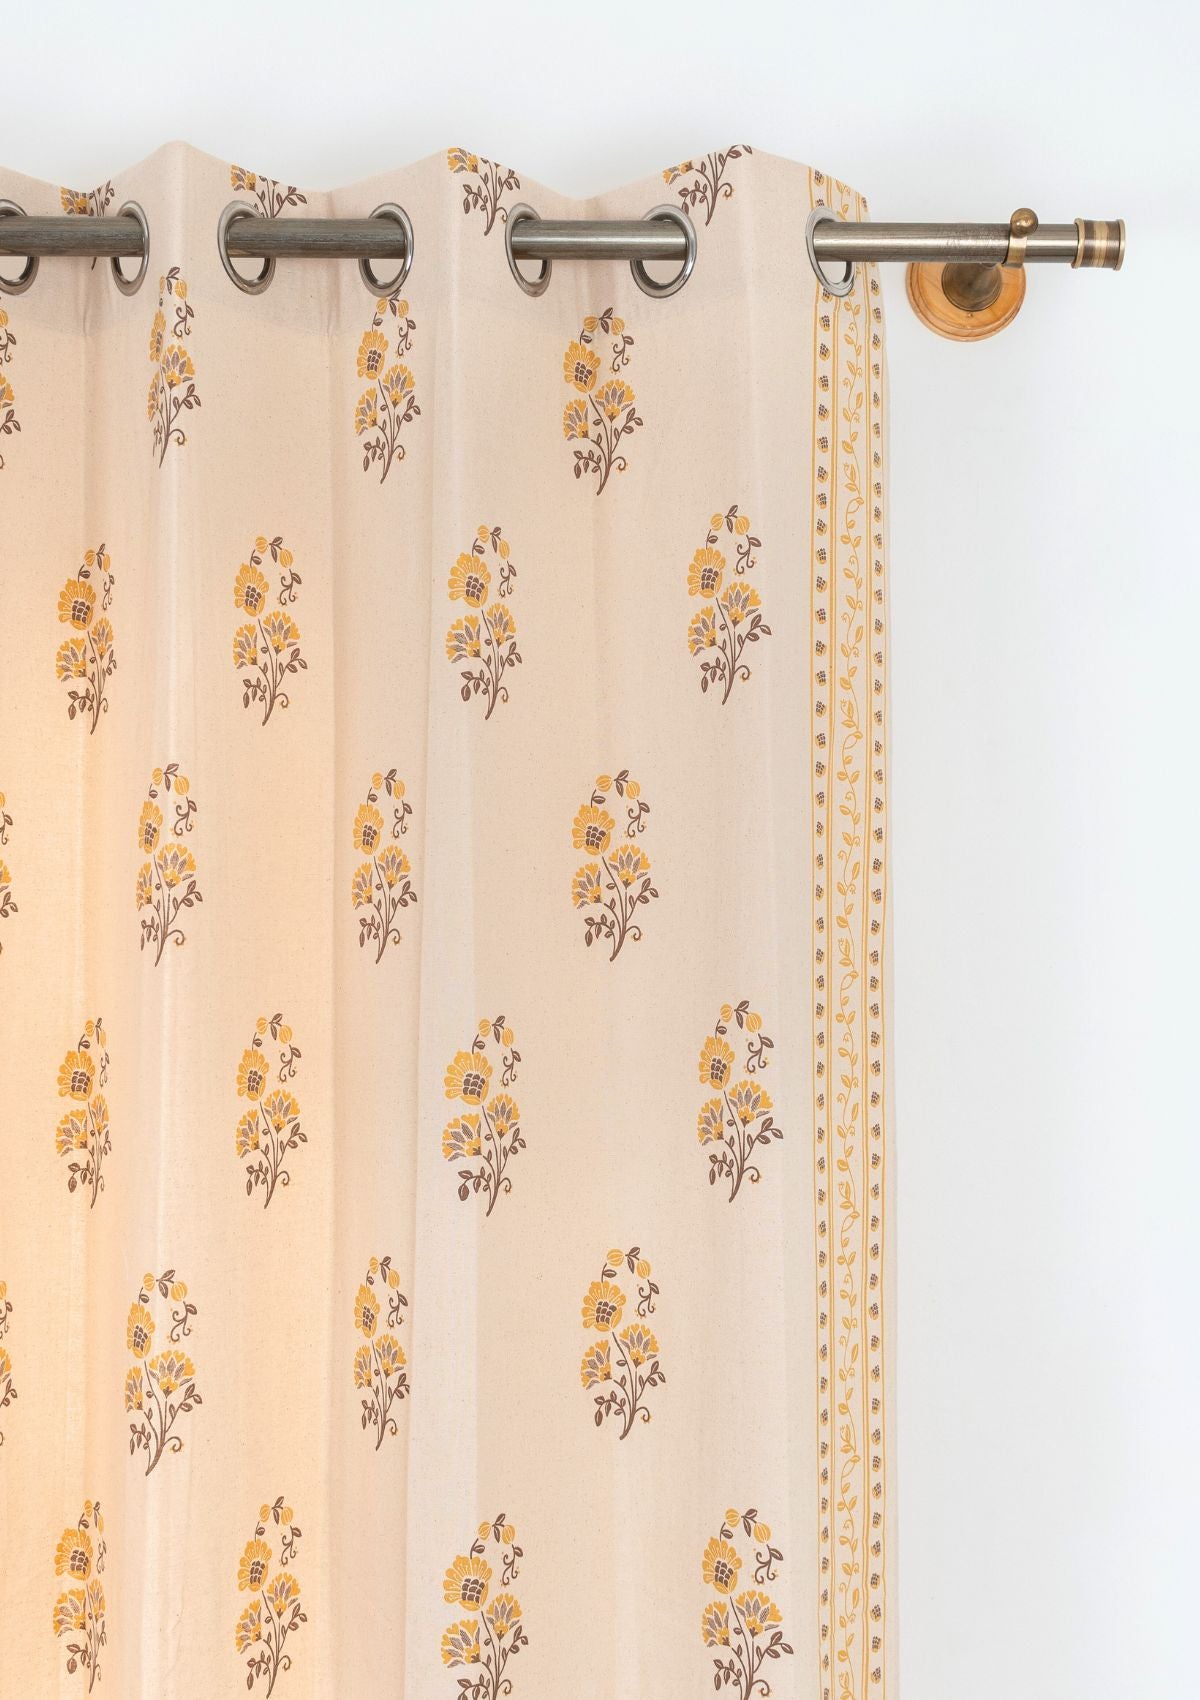 Indus 100% Customizable Cotton ethnic curtain for living room - Room darkening - Amber